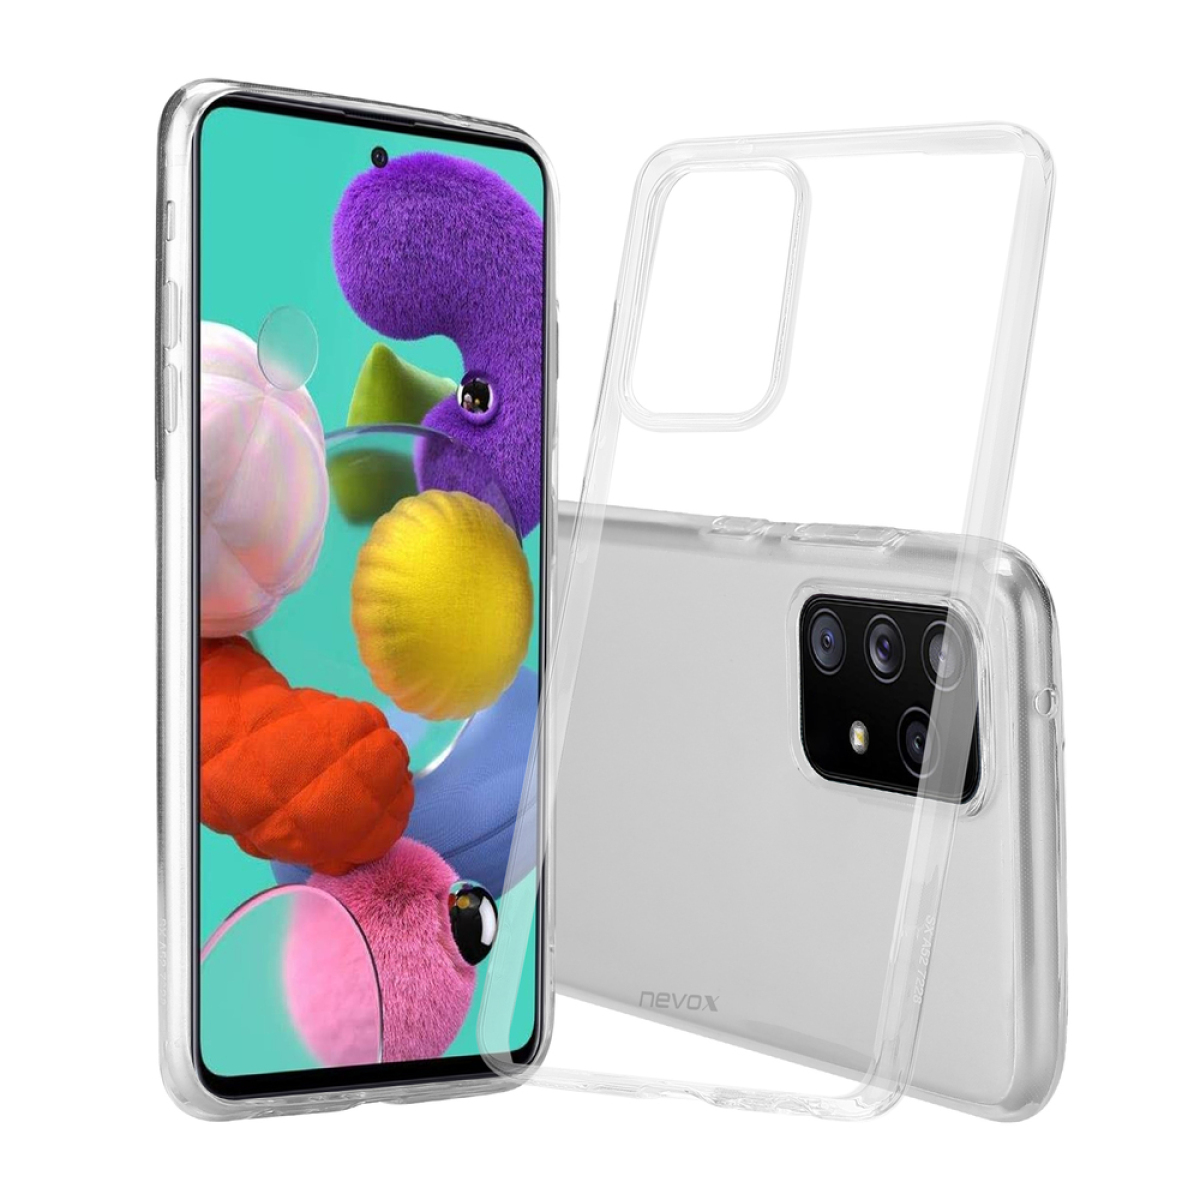 5G Samsung, A53 transparent, Edition, Full Galaxy Enterprise | A53 Galaxy Flex A53 5G Cover, 5G NEVOX Transparent StyleShell Galaxy